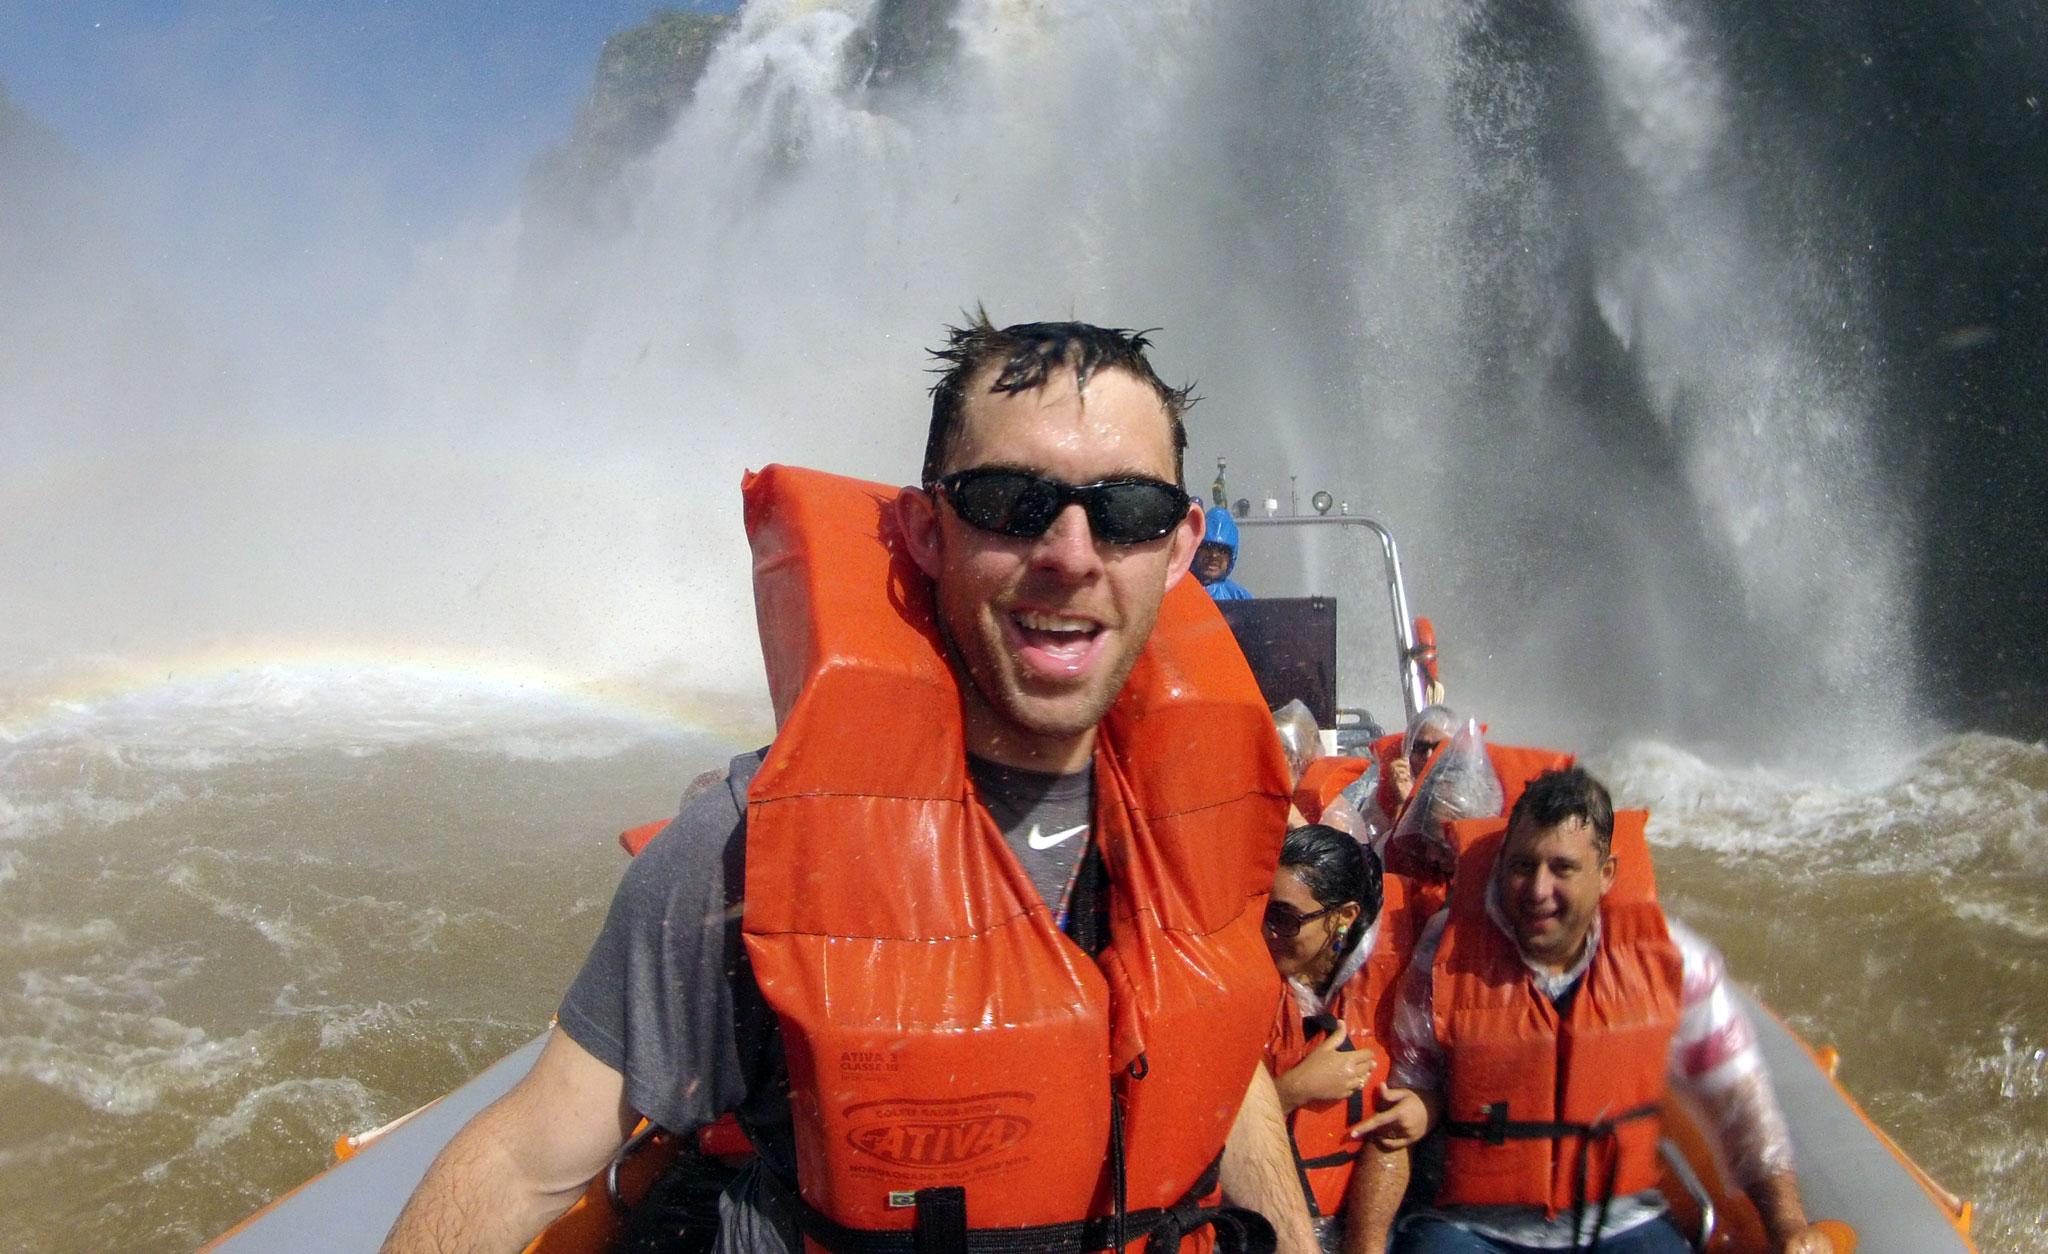 The legend of Brazil's Iguaçu Falls